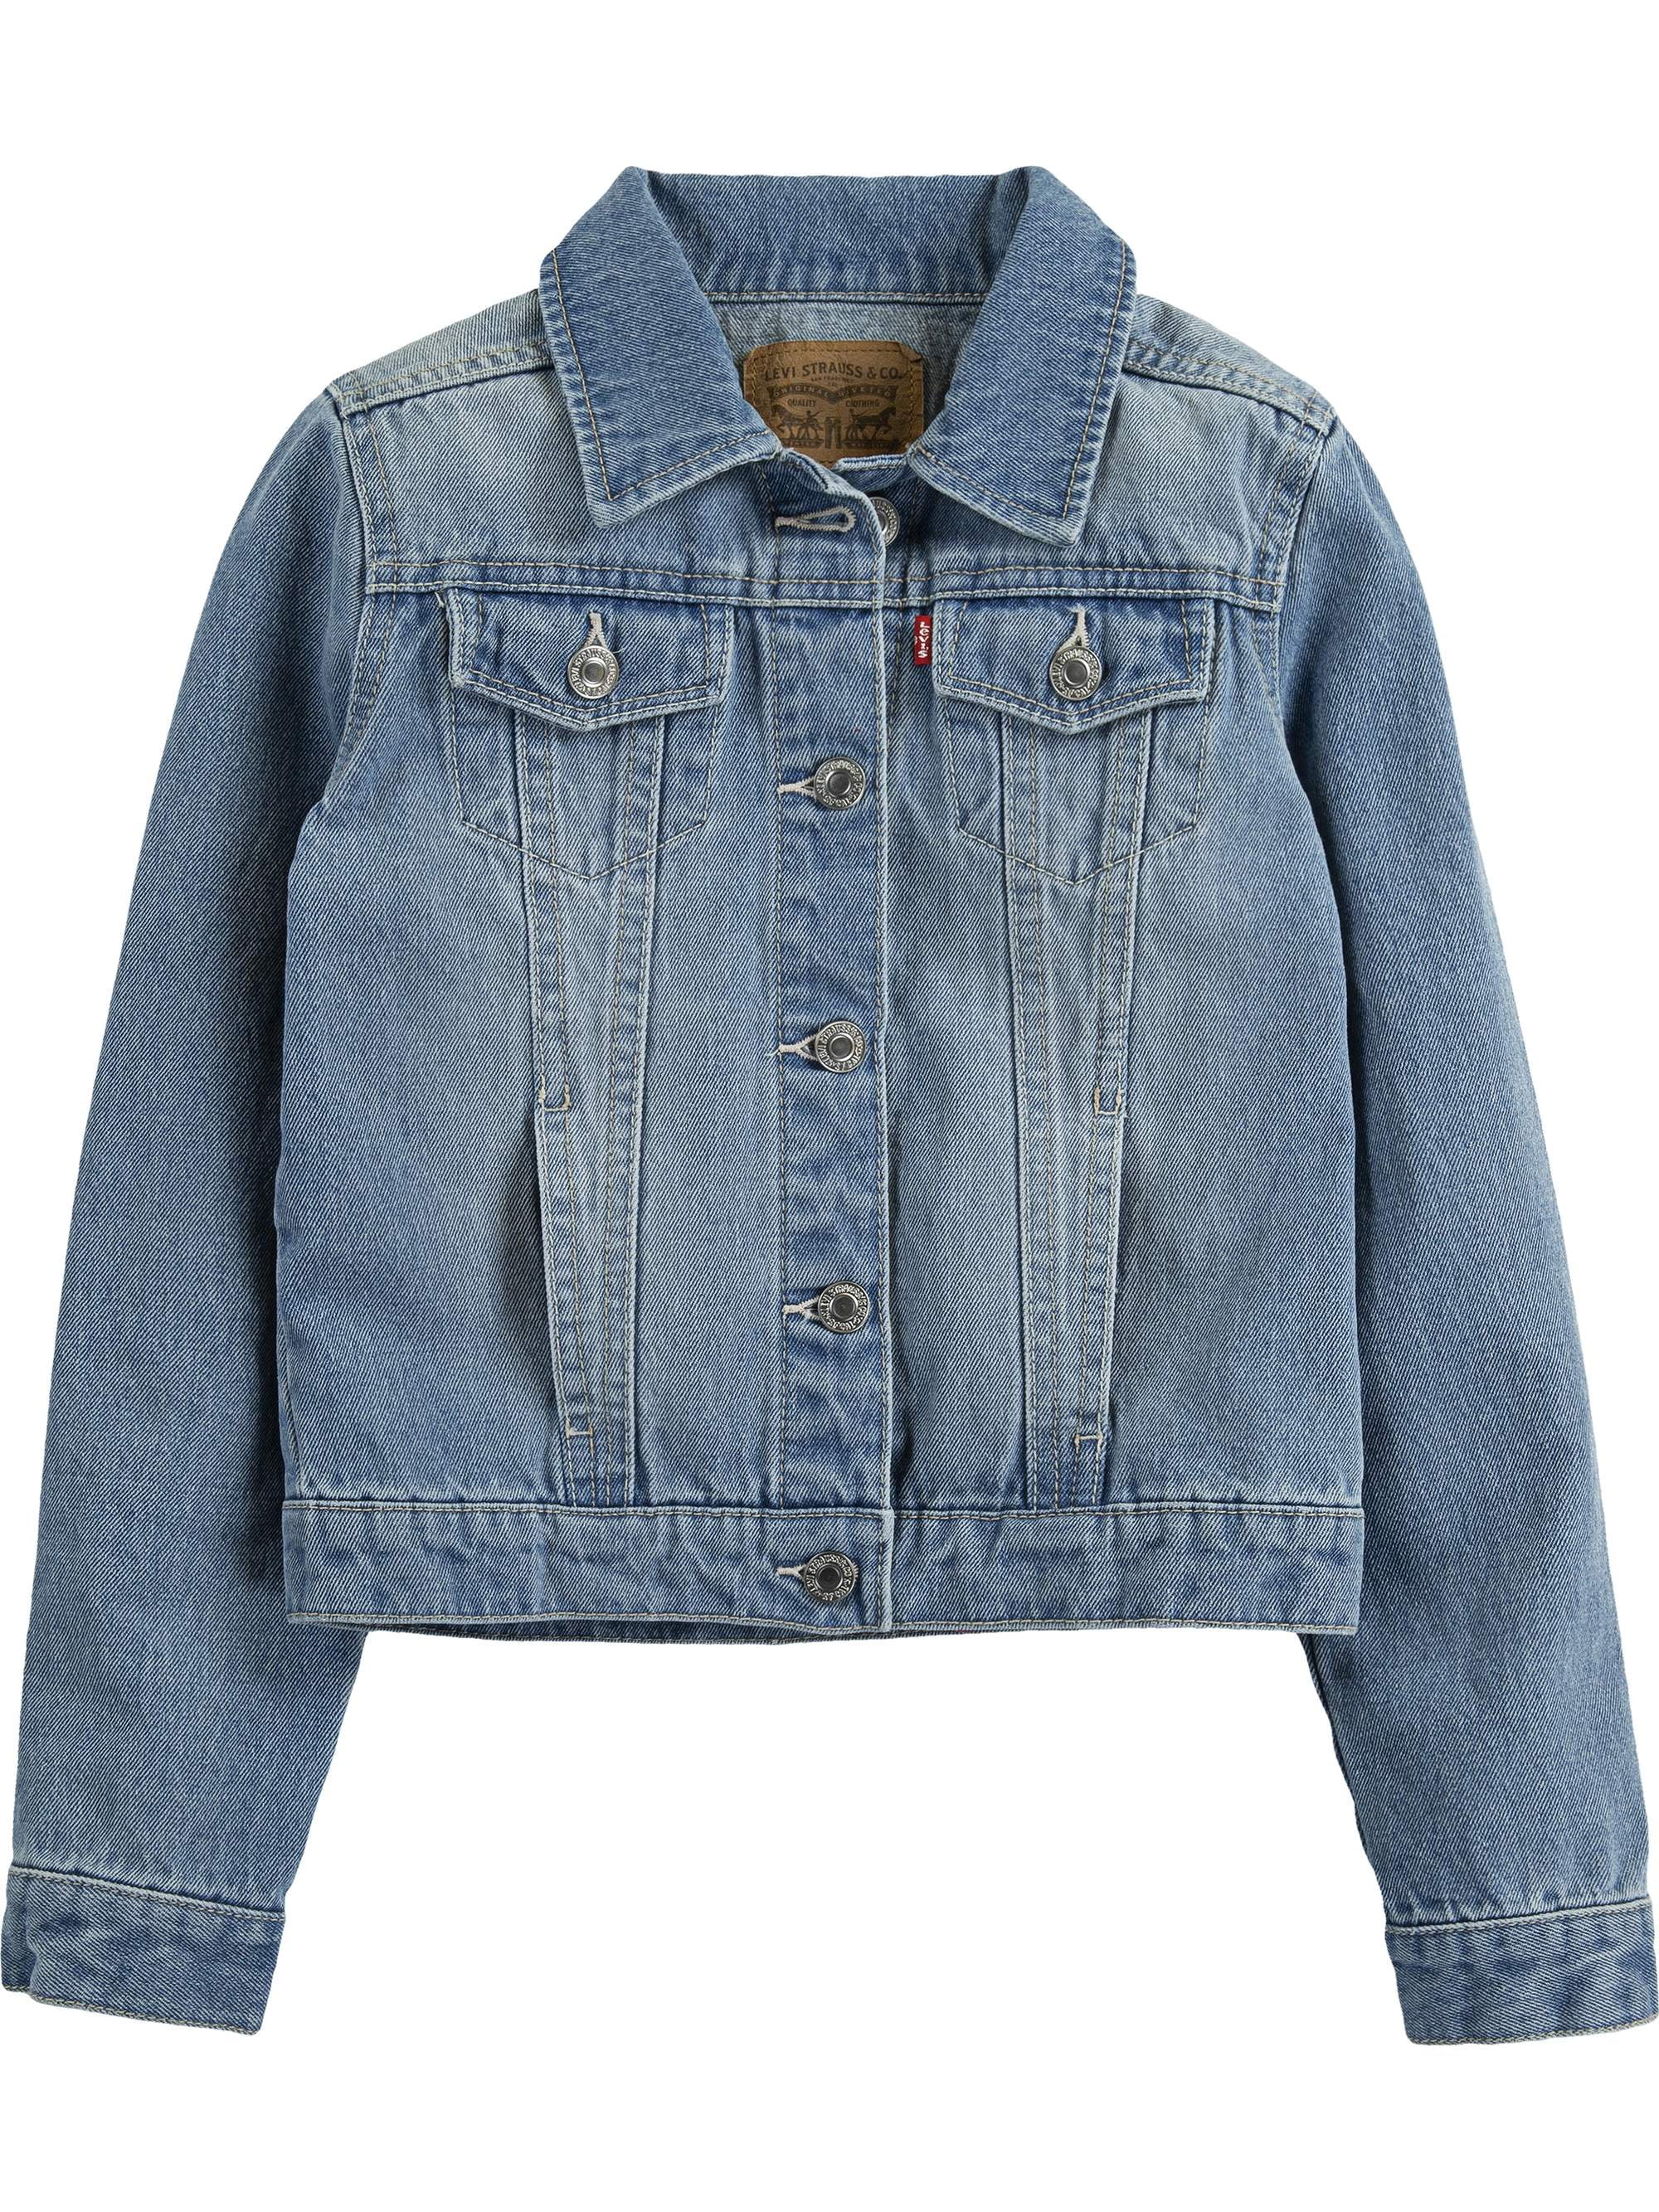 Levi's Girls' Denim Trucker Jacket, Sizes 4-16 - Walmart.com